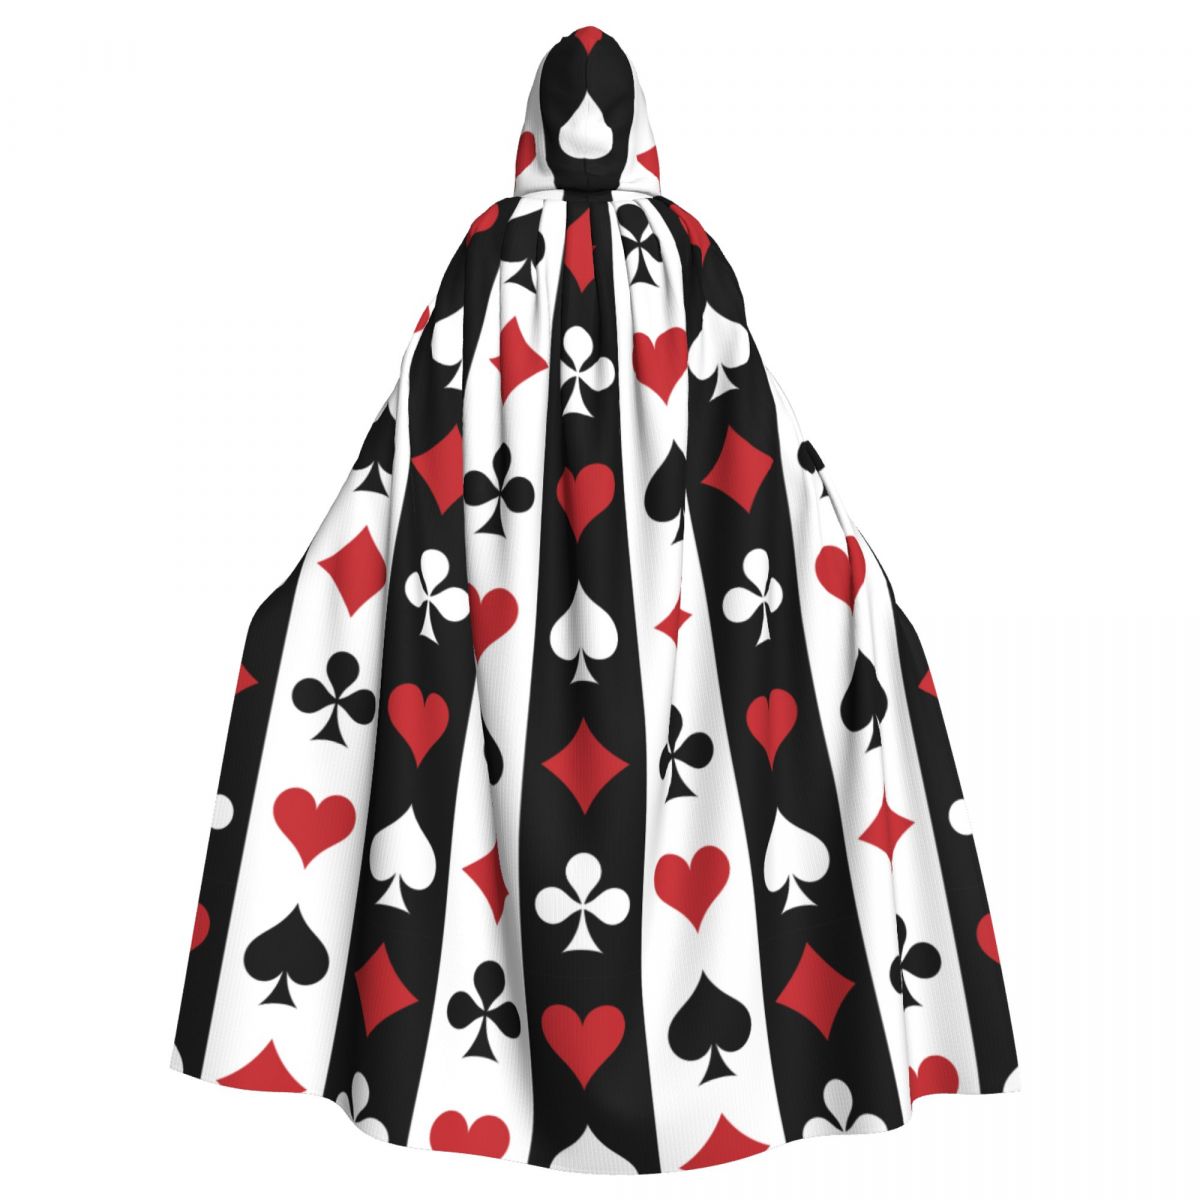 Hooded Cloak Unisex Cloak with Hood Cloak Cosplay Costume Poker Red Black Alice In Wonderland